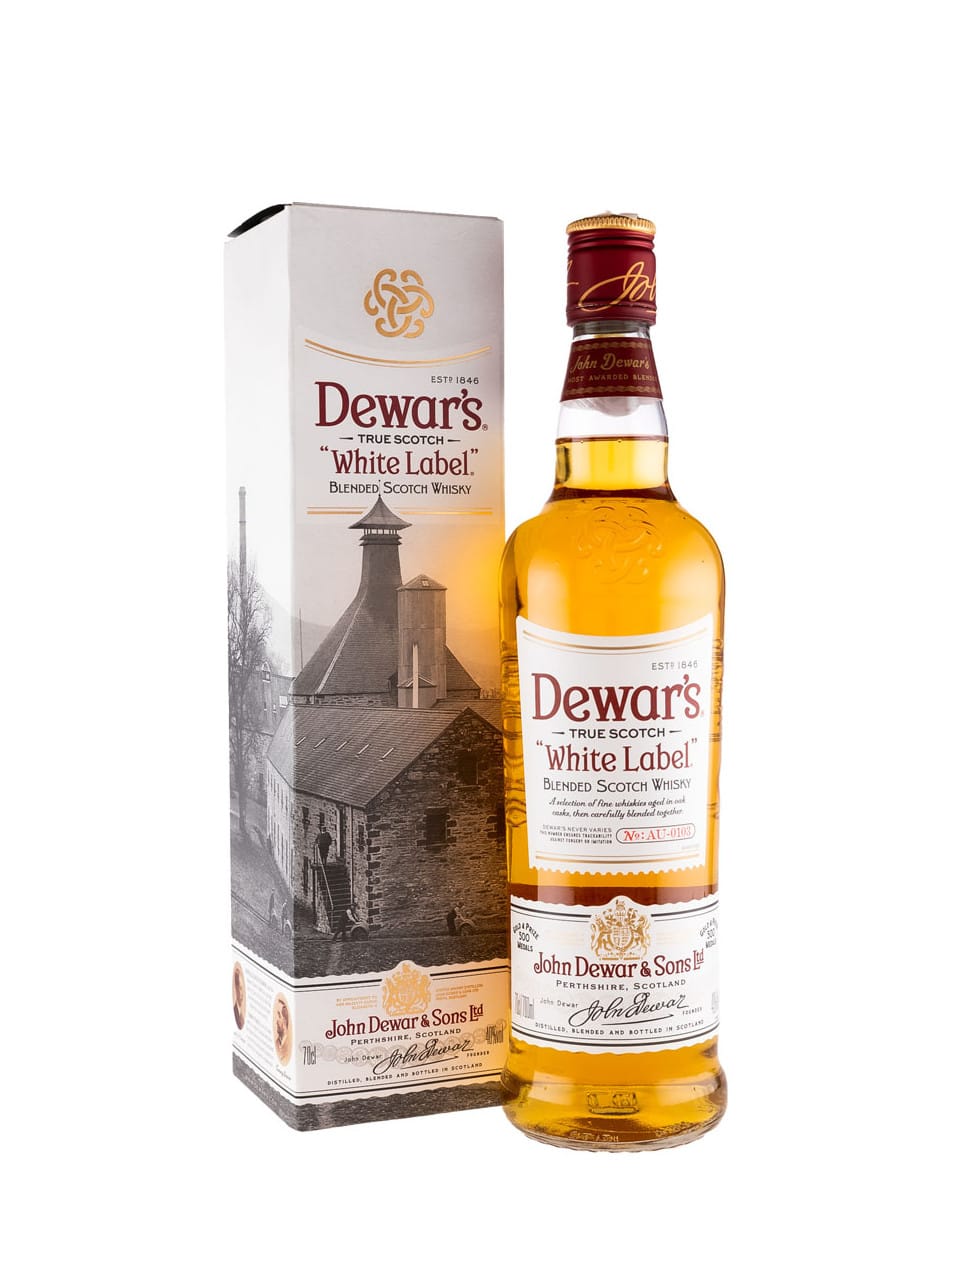 Dewar's White Label Scotch Whisky Gift Box